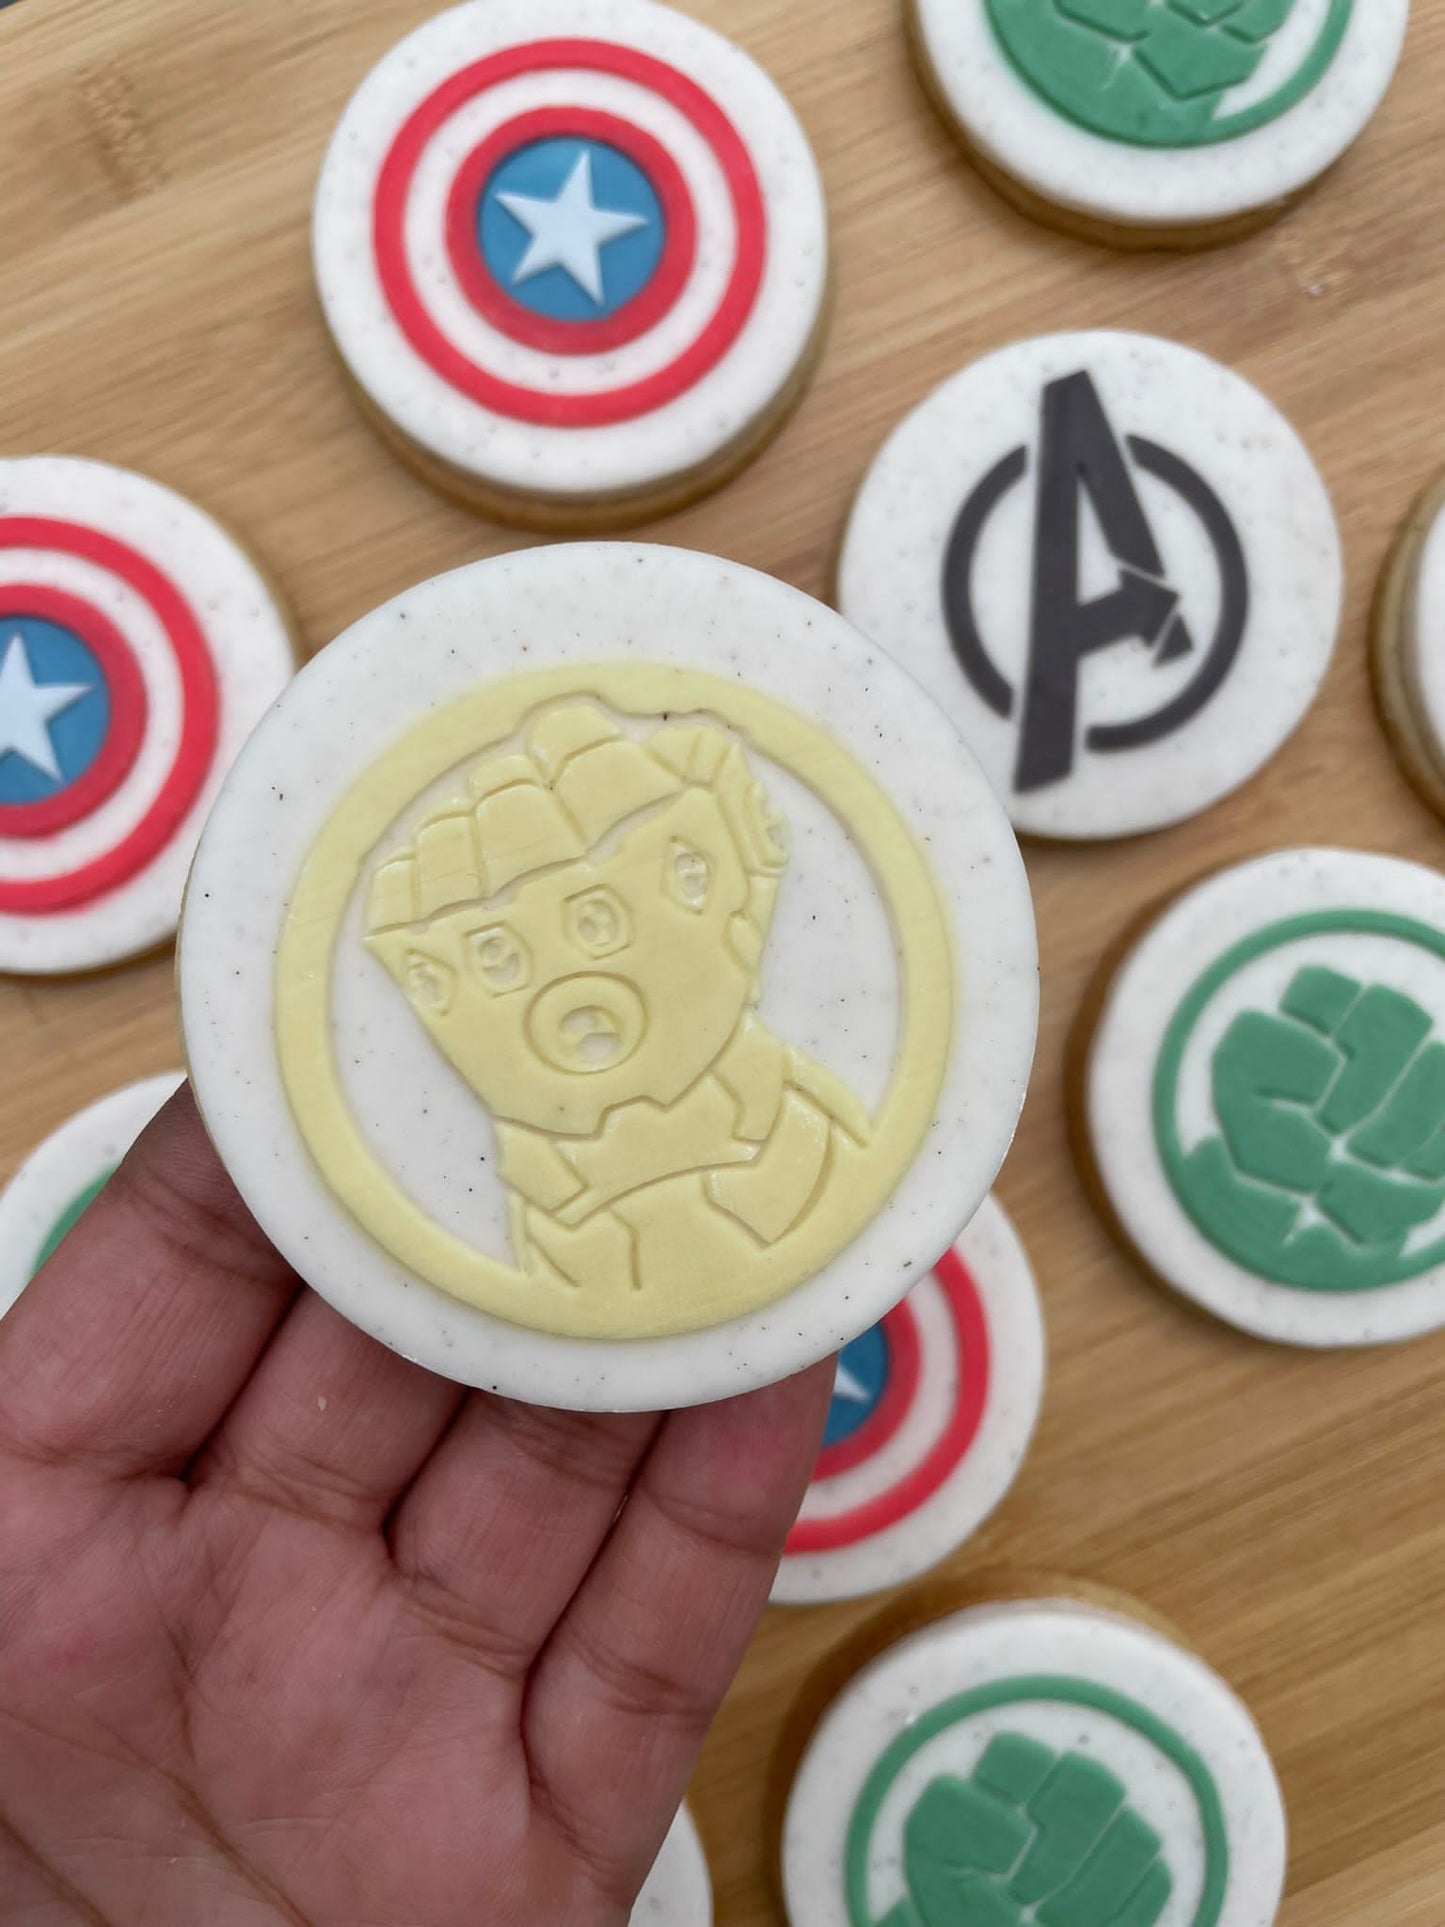 Avengers - super hero - Thanos Gauntlet debossing MEG cookie cutters